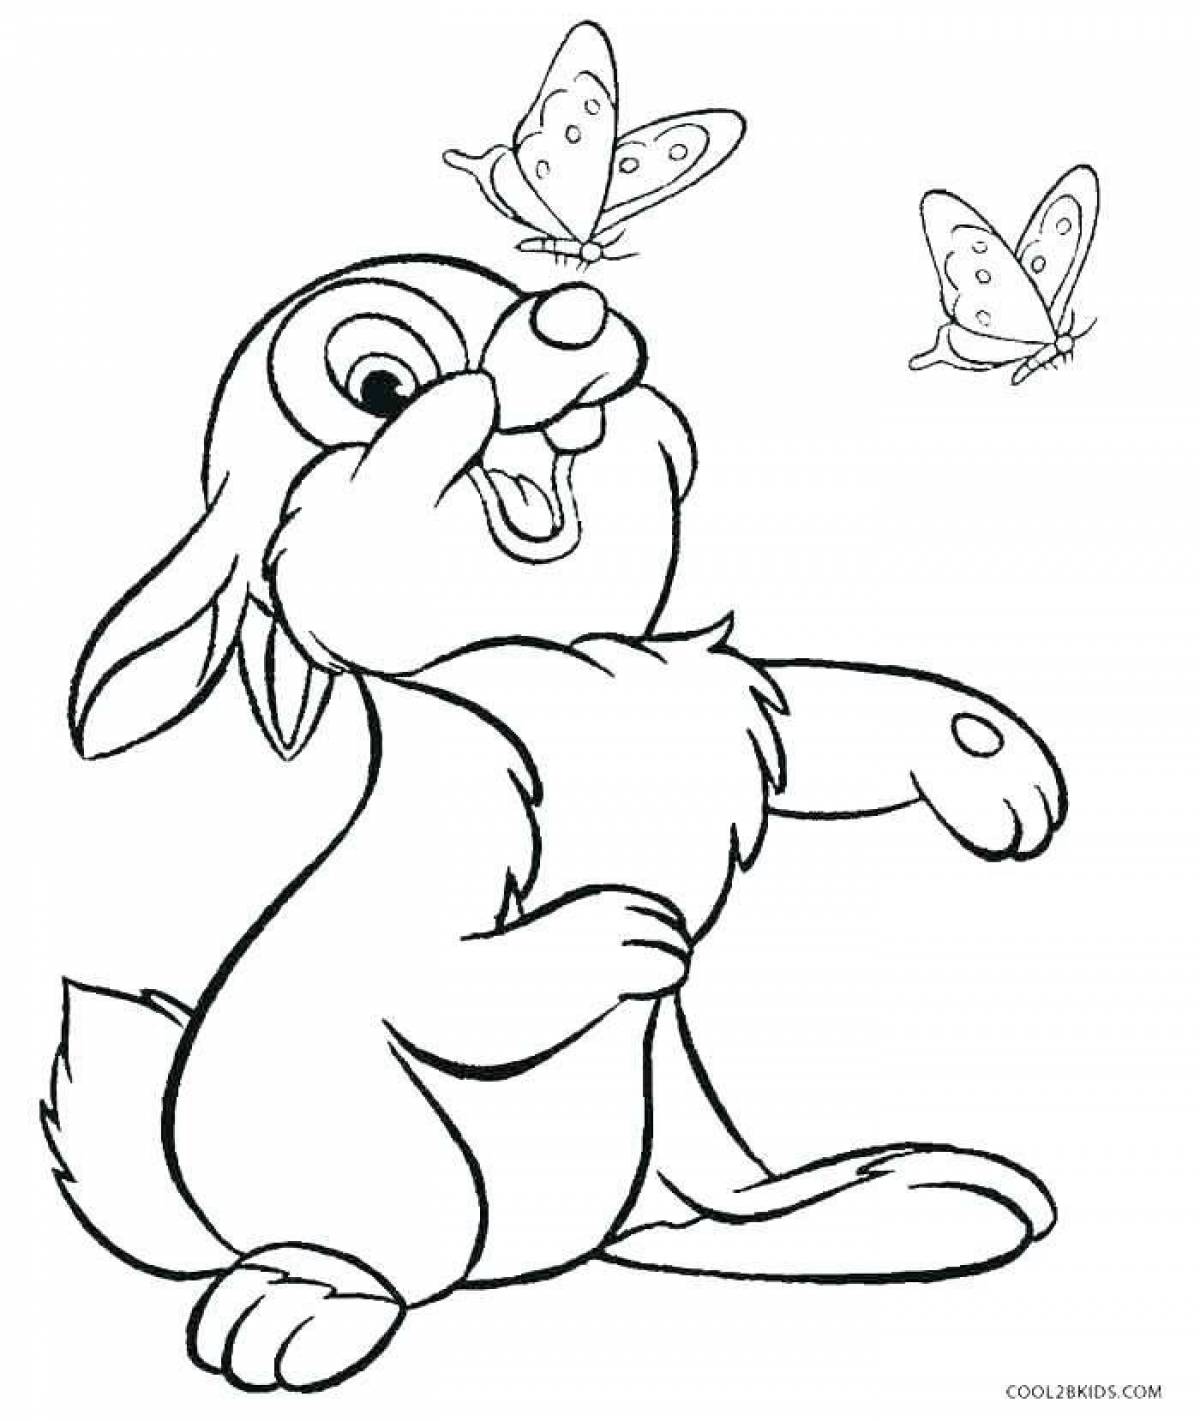 Игривая раскраска page bunny picture